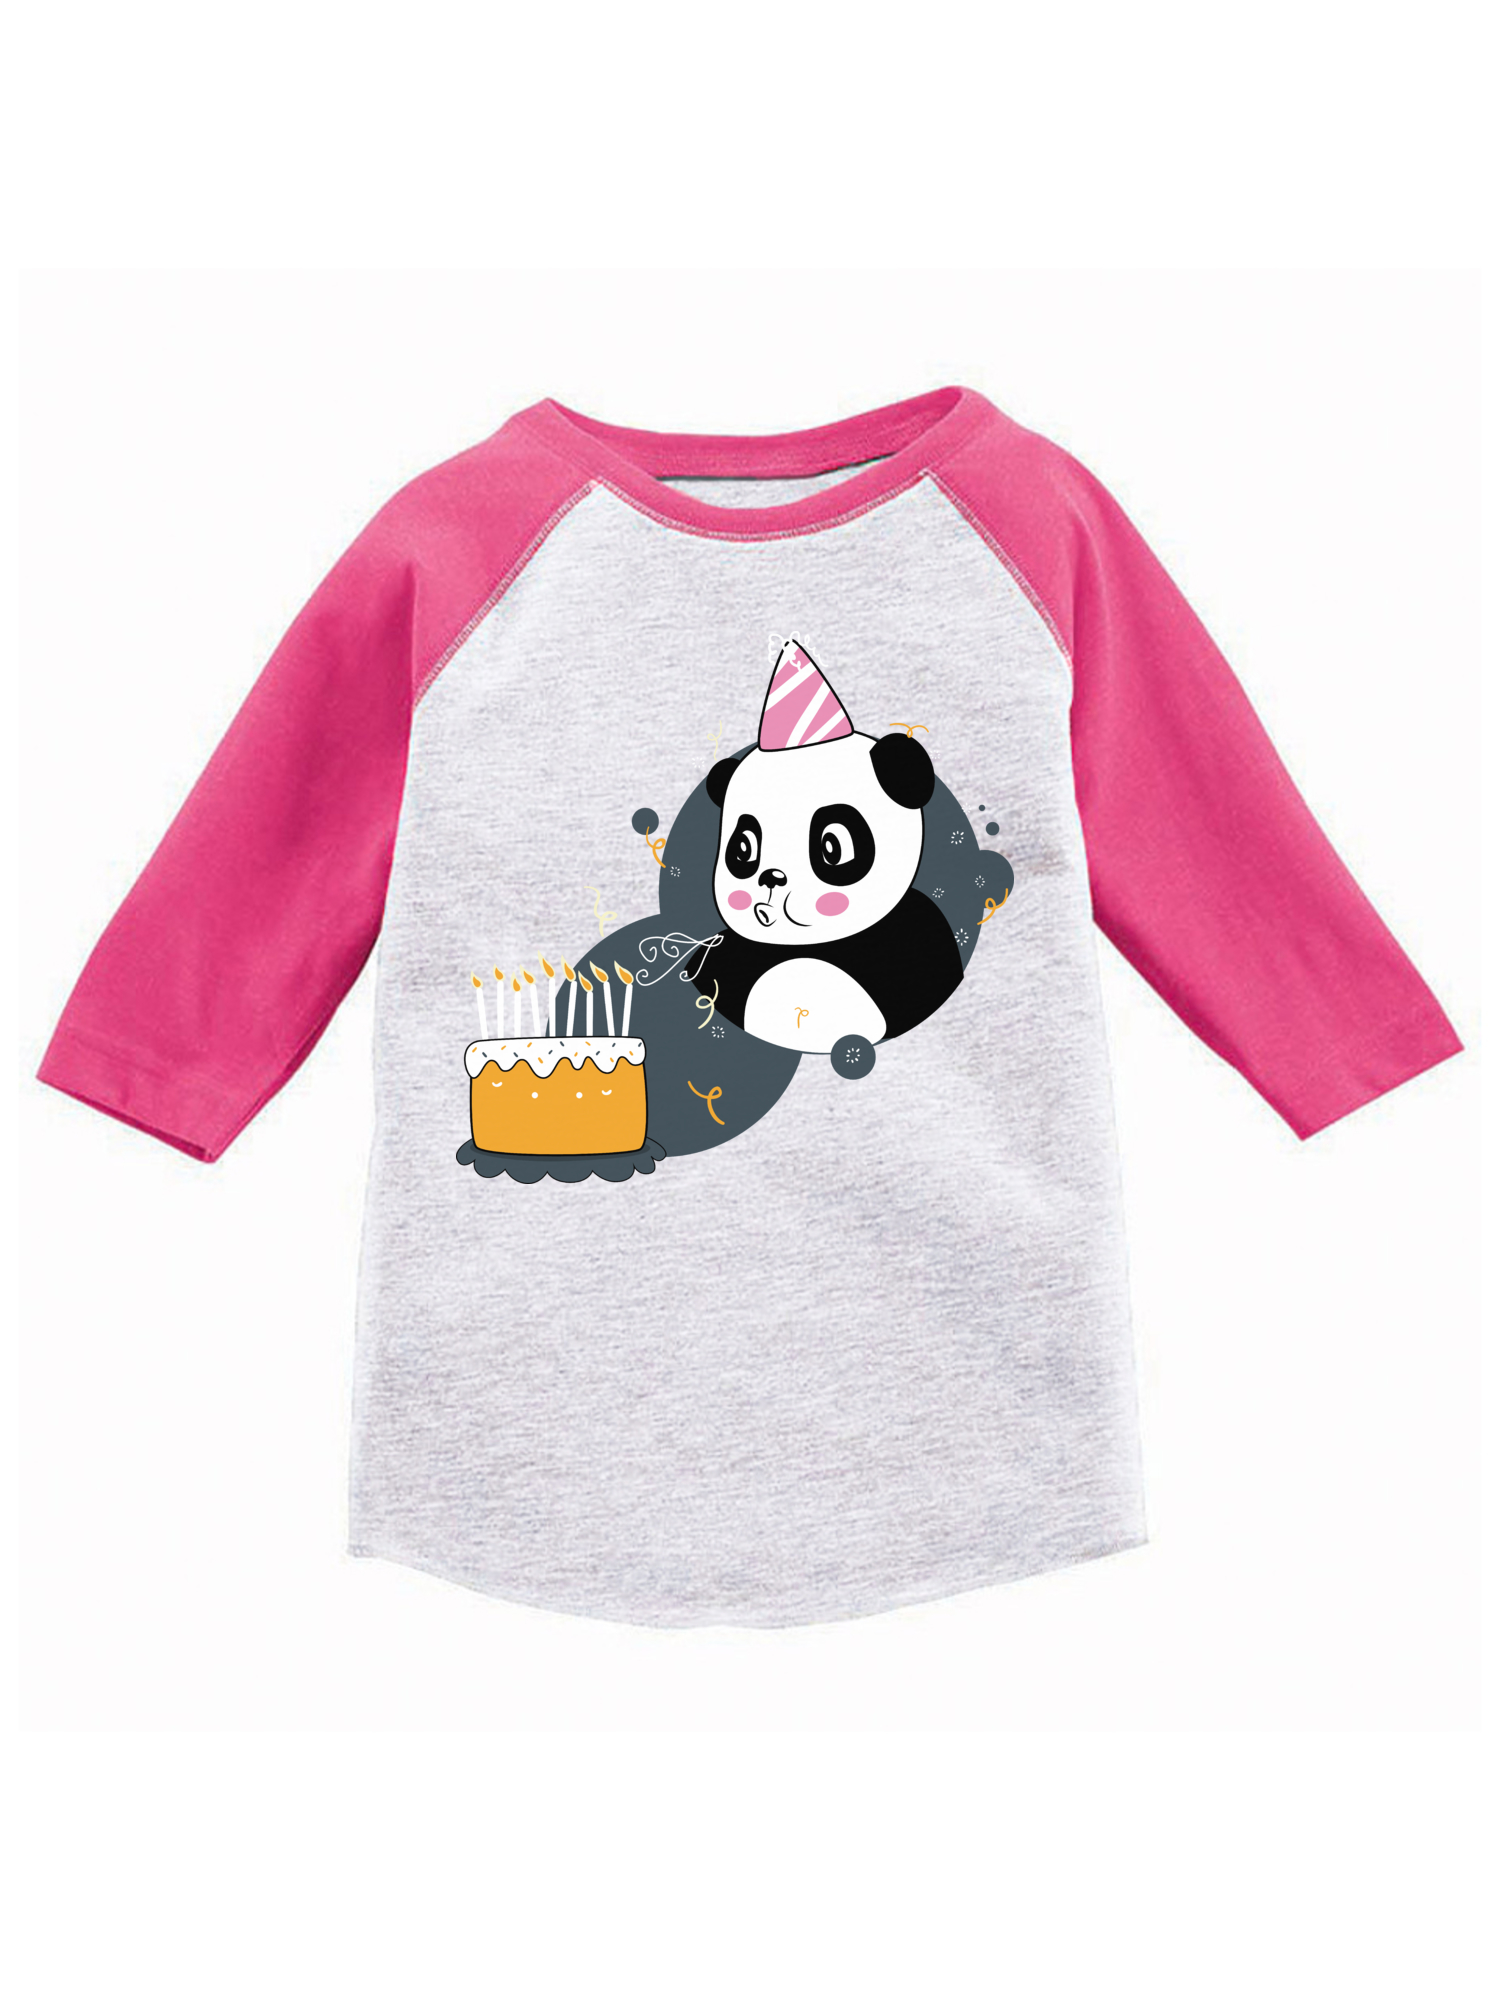 Awkward Styles Panda Birthday Toddler Raglan Themed Party Cute Kids Birthday Shirts Animal Lover Funny Panda Baseball Tshirts for Boys Funny Panda Baseball Tshirts for Girls Birthday Gifts - image 1 of 4